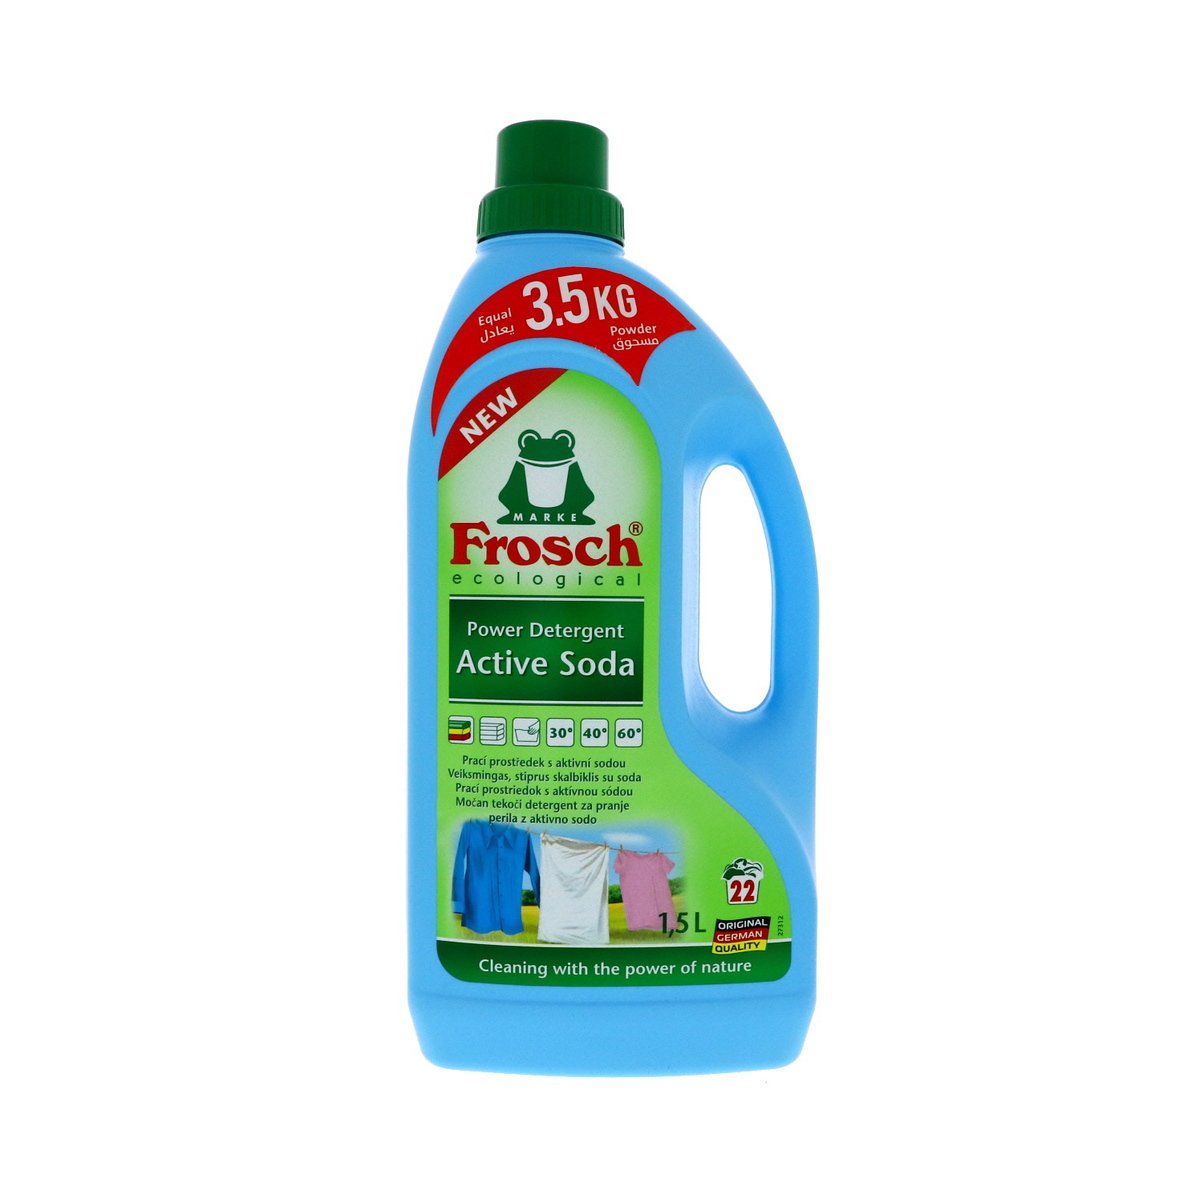 Frosch Power Detergent Active Soda 1.5Litre